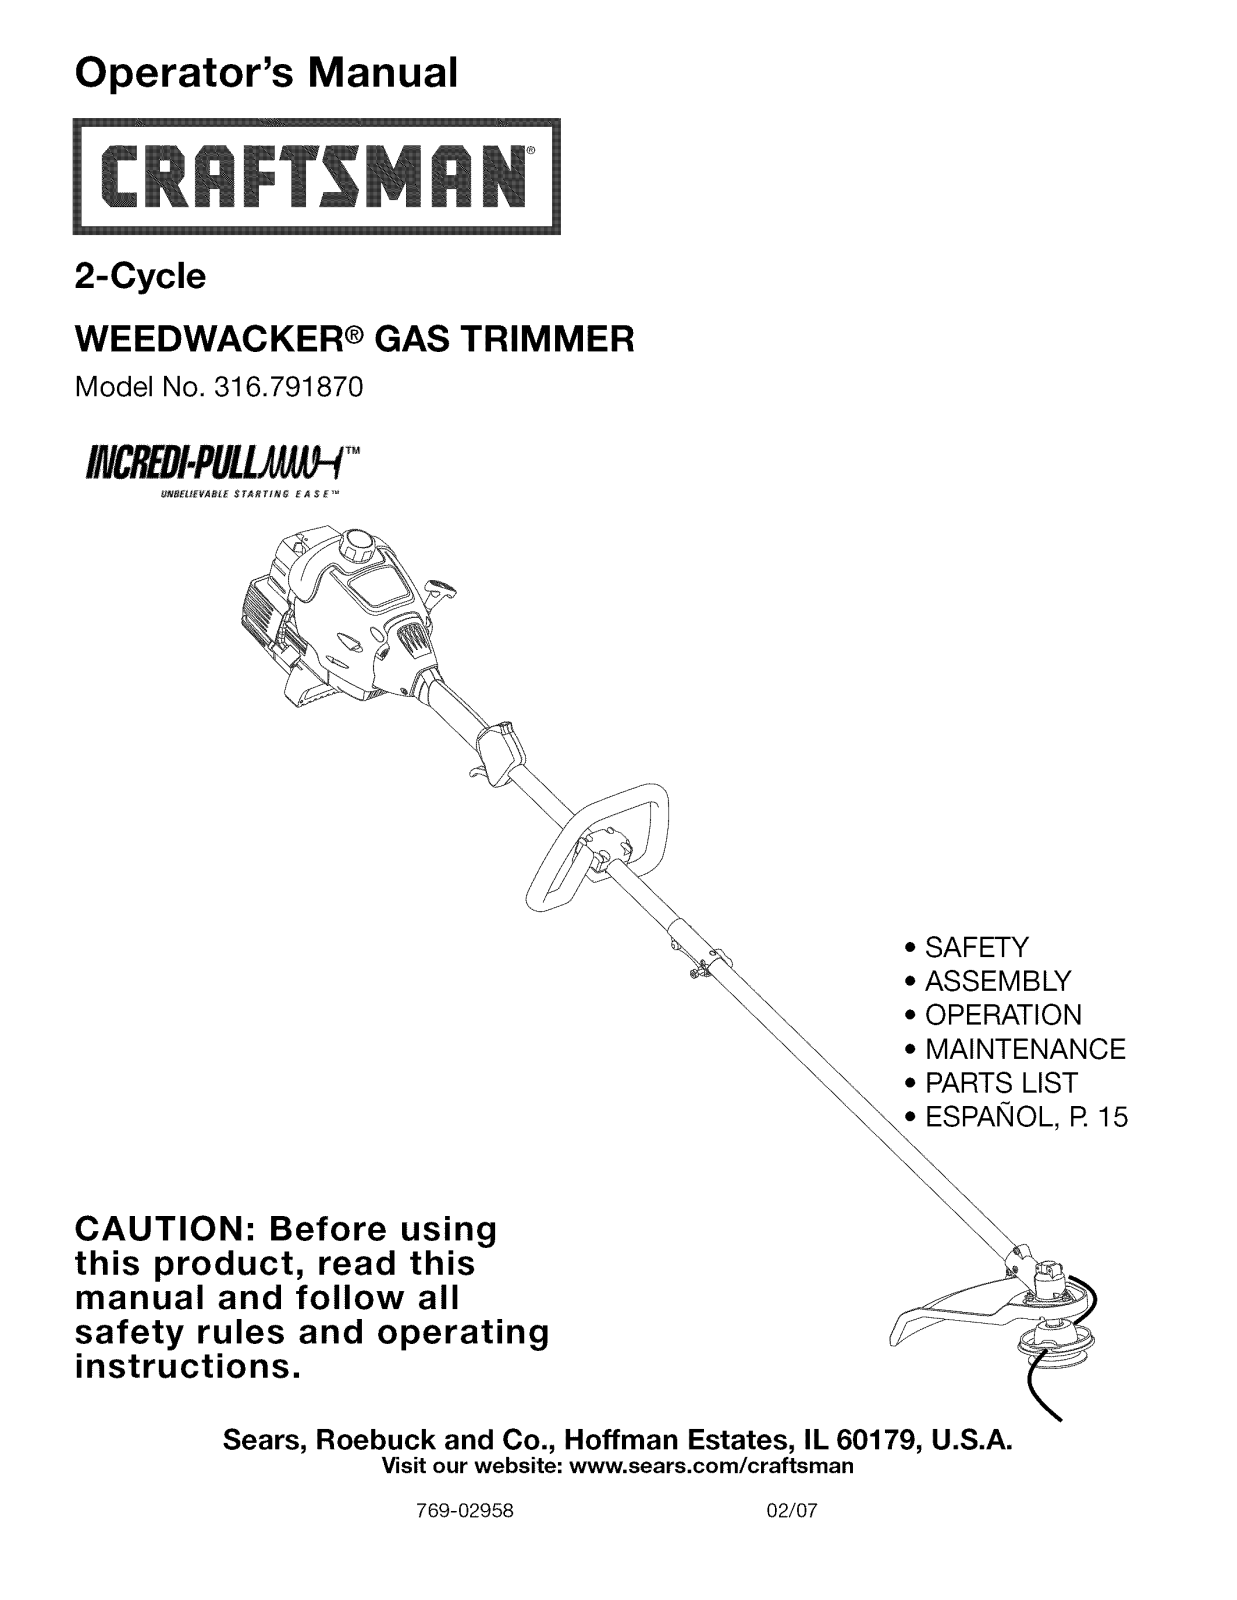 Craftsman 316791870 Owner’s Manual